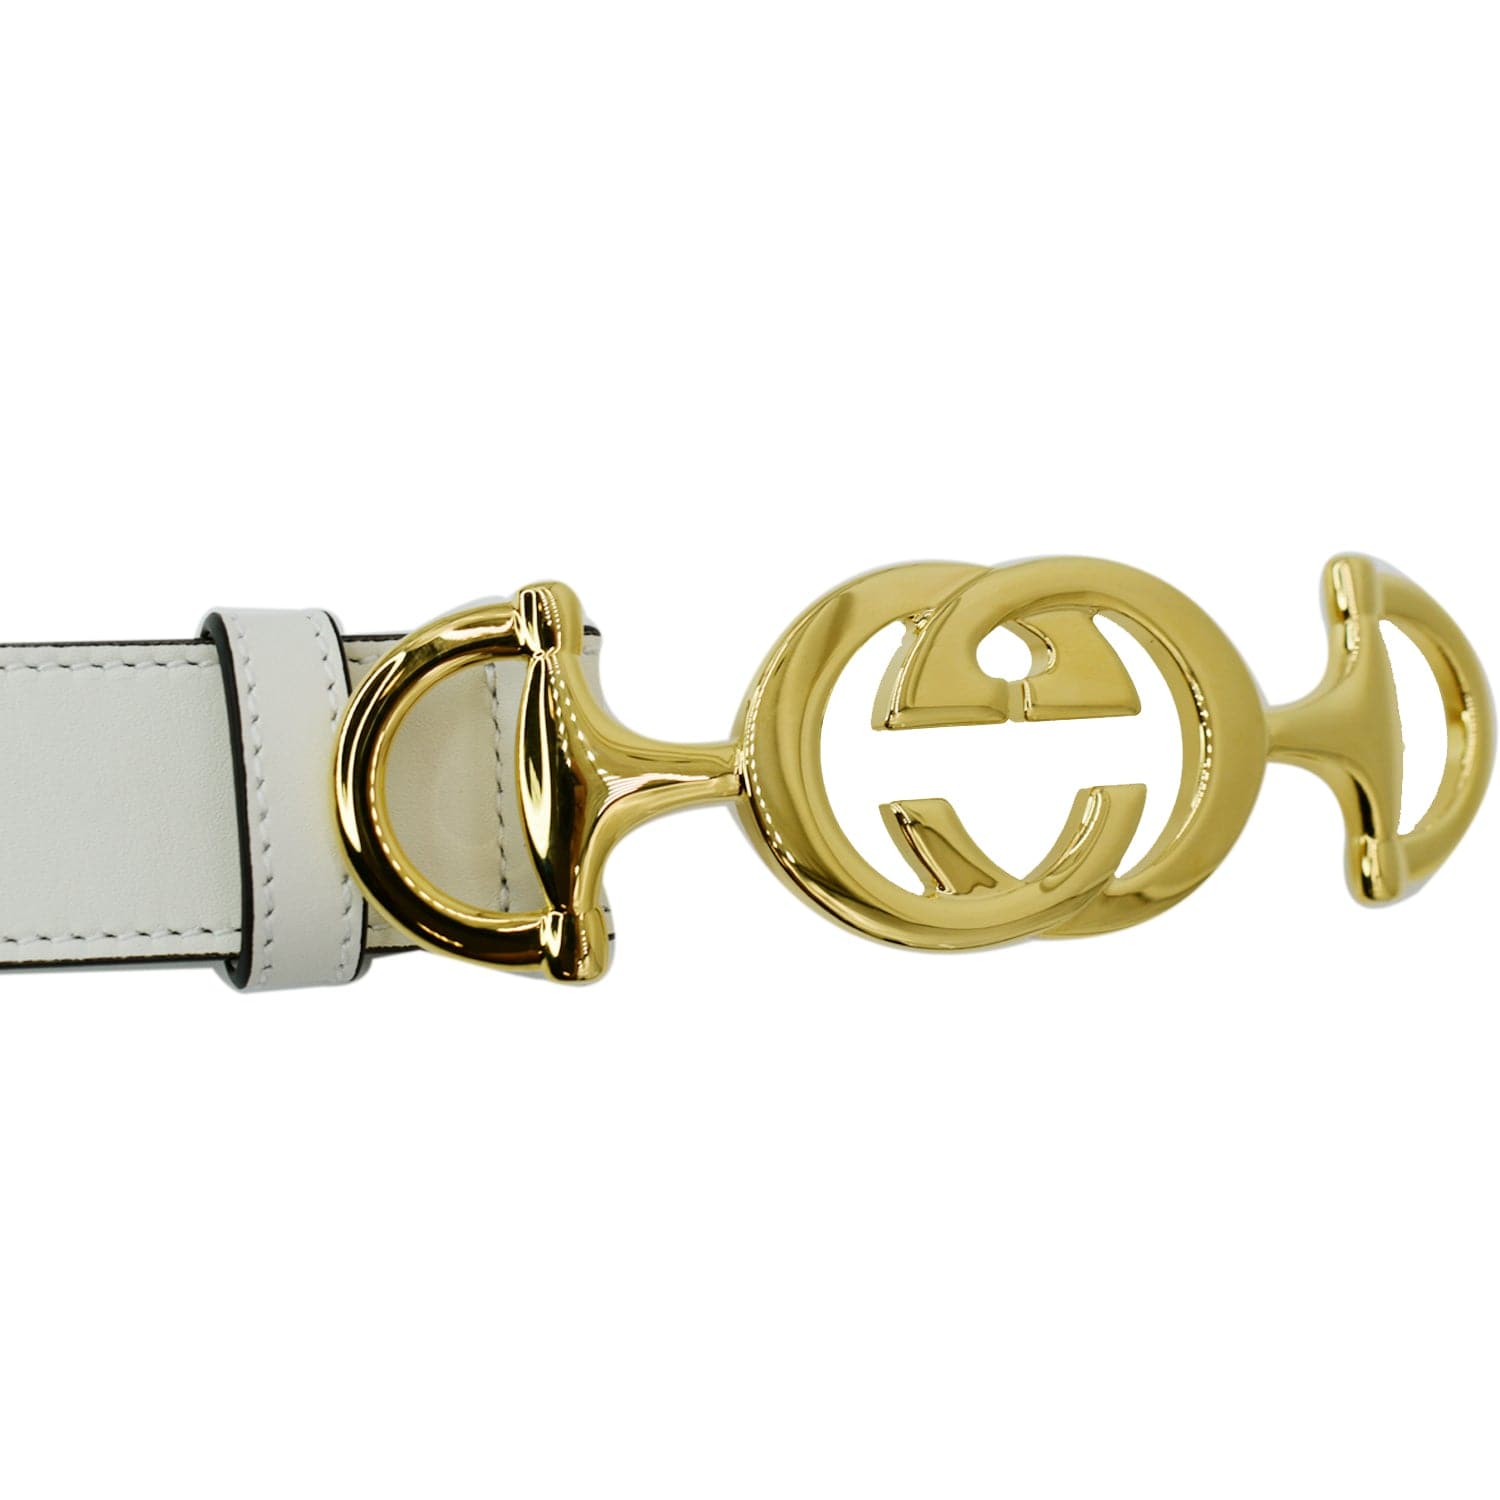 GUCCI Horsebit Interlocking Leather Belt White 550122 Size 95/38 - 10%